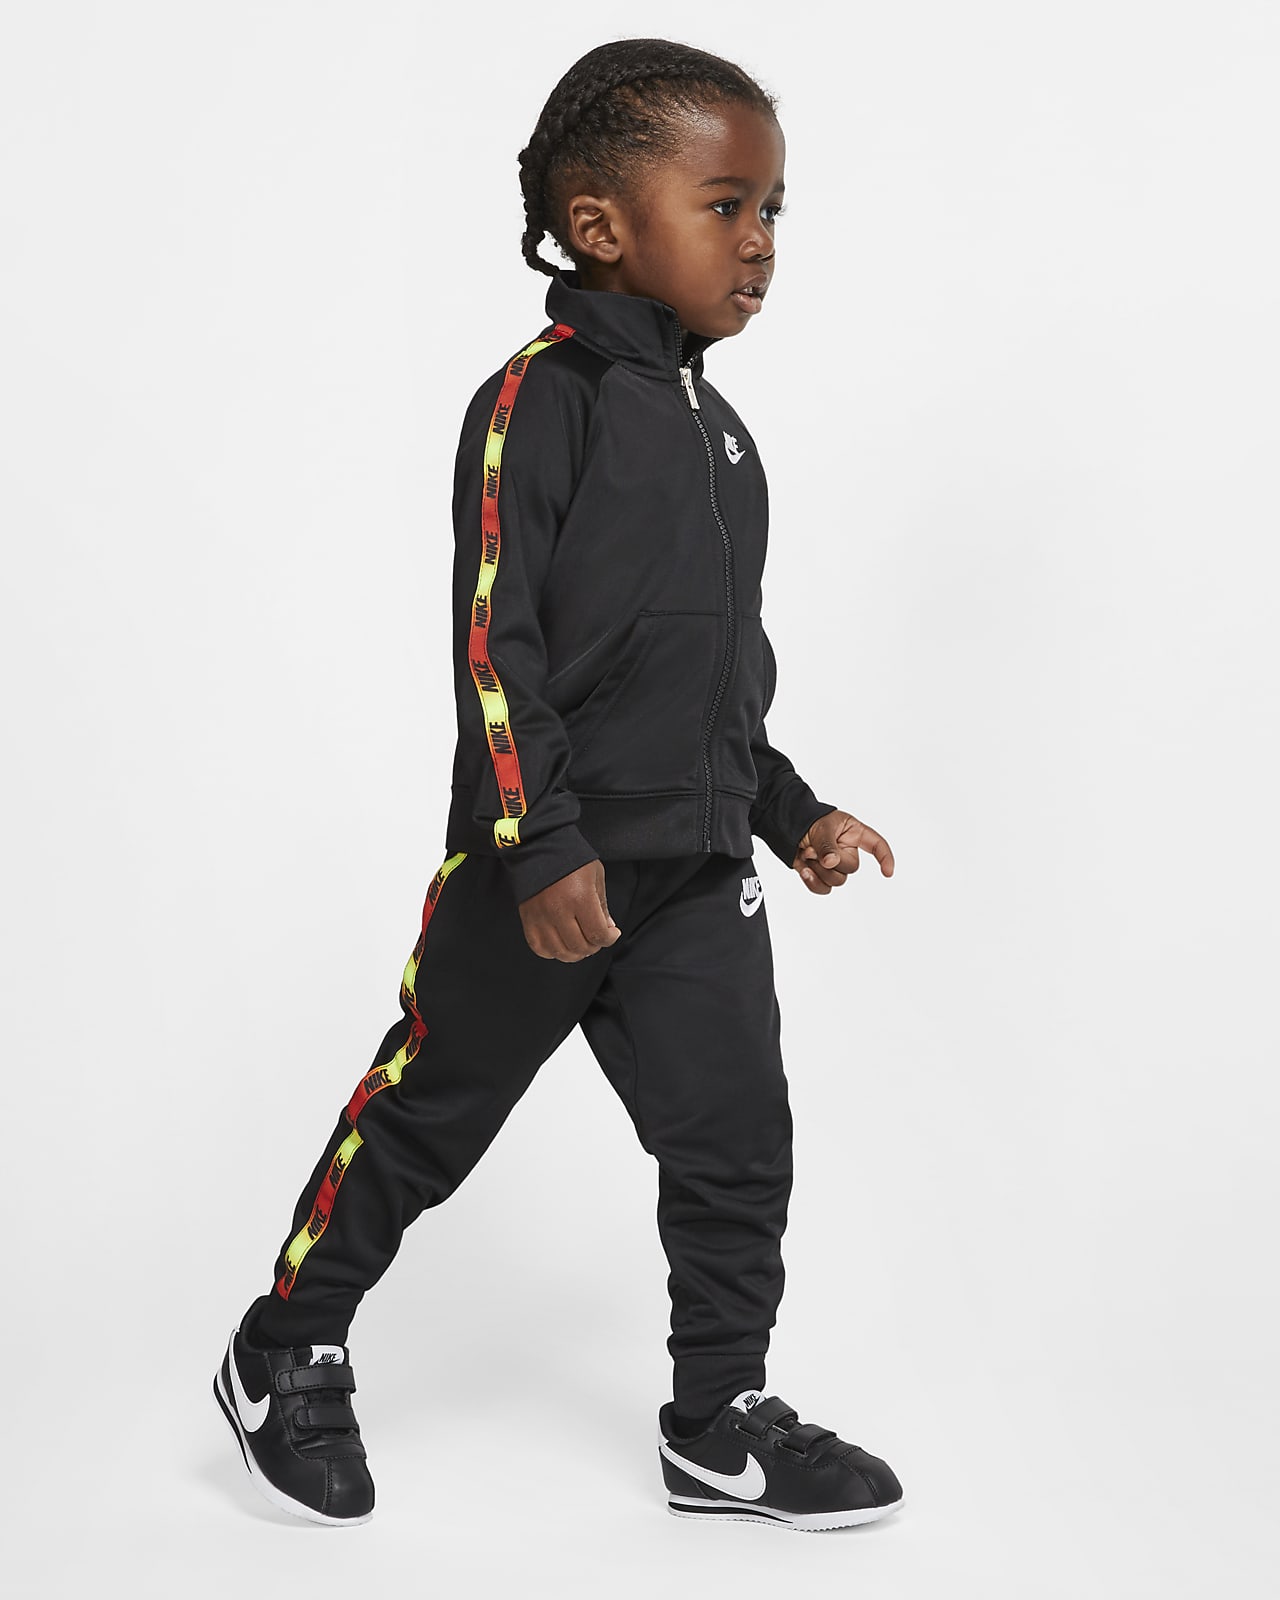 Nike-sæt med jakke og bukser til småbørn. DK